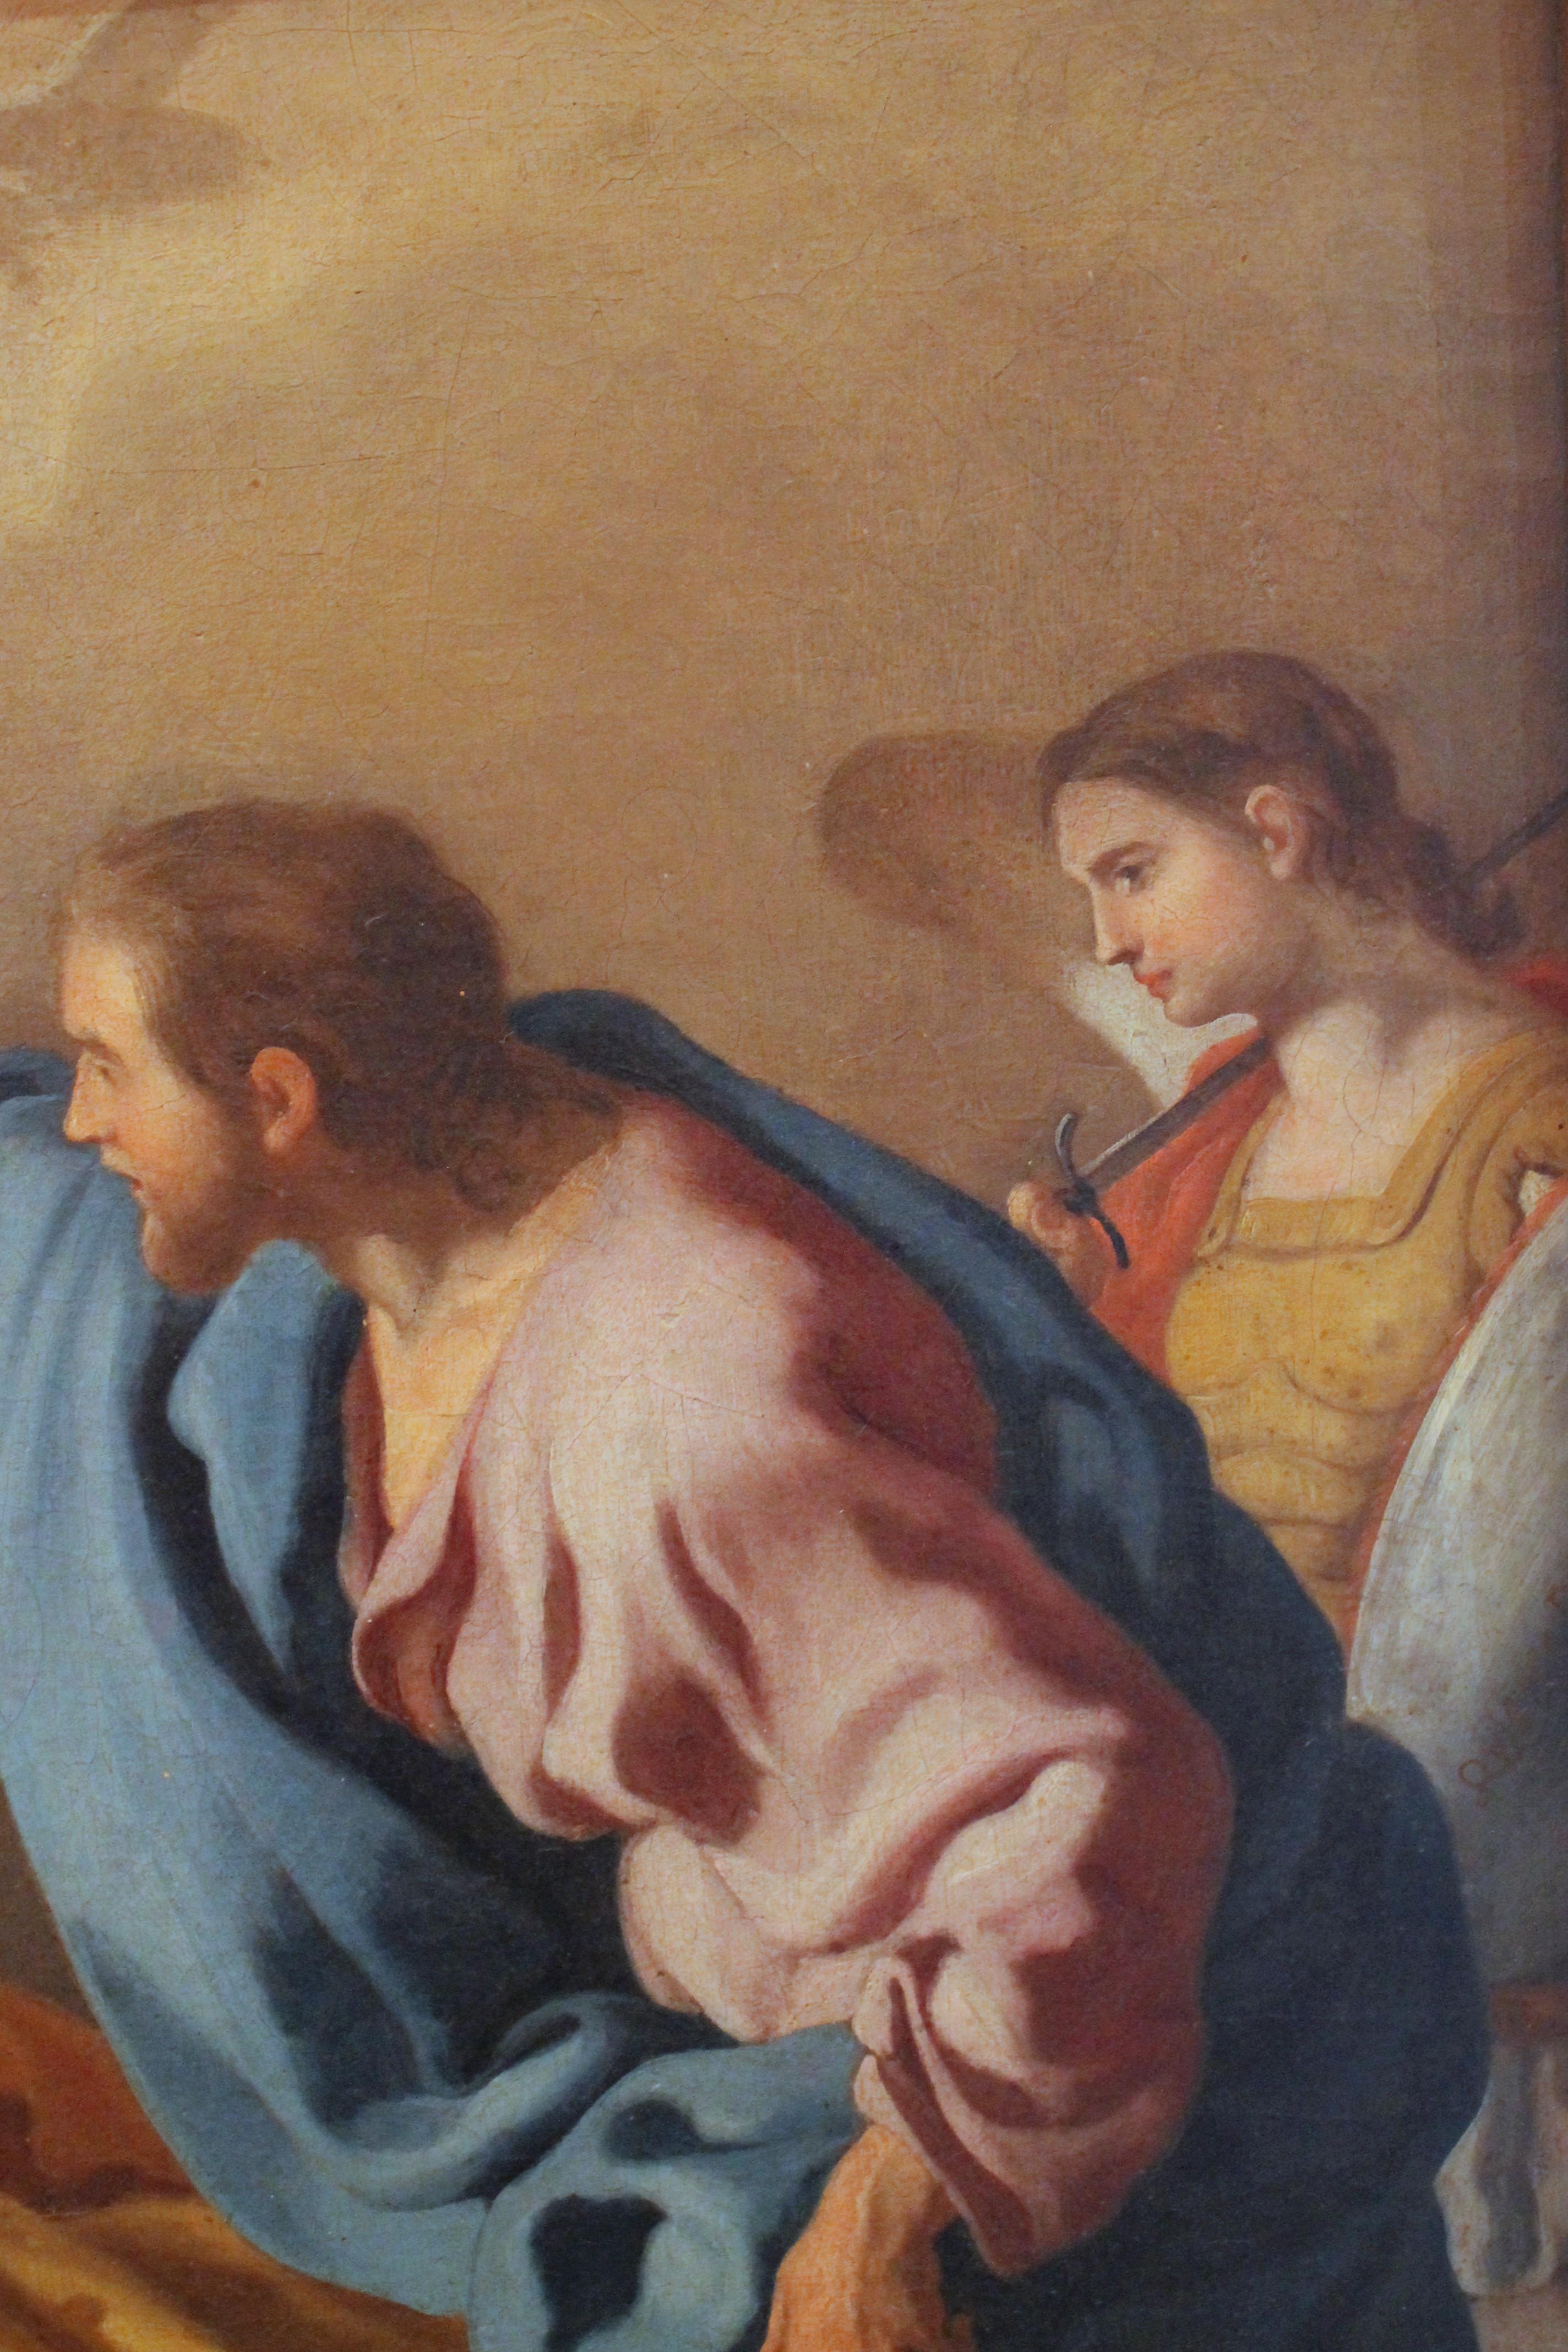 The Death of Saint Joseph, Italian Baroque Religious Scene Oil on Canvas Painting 1